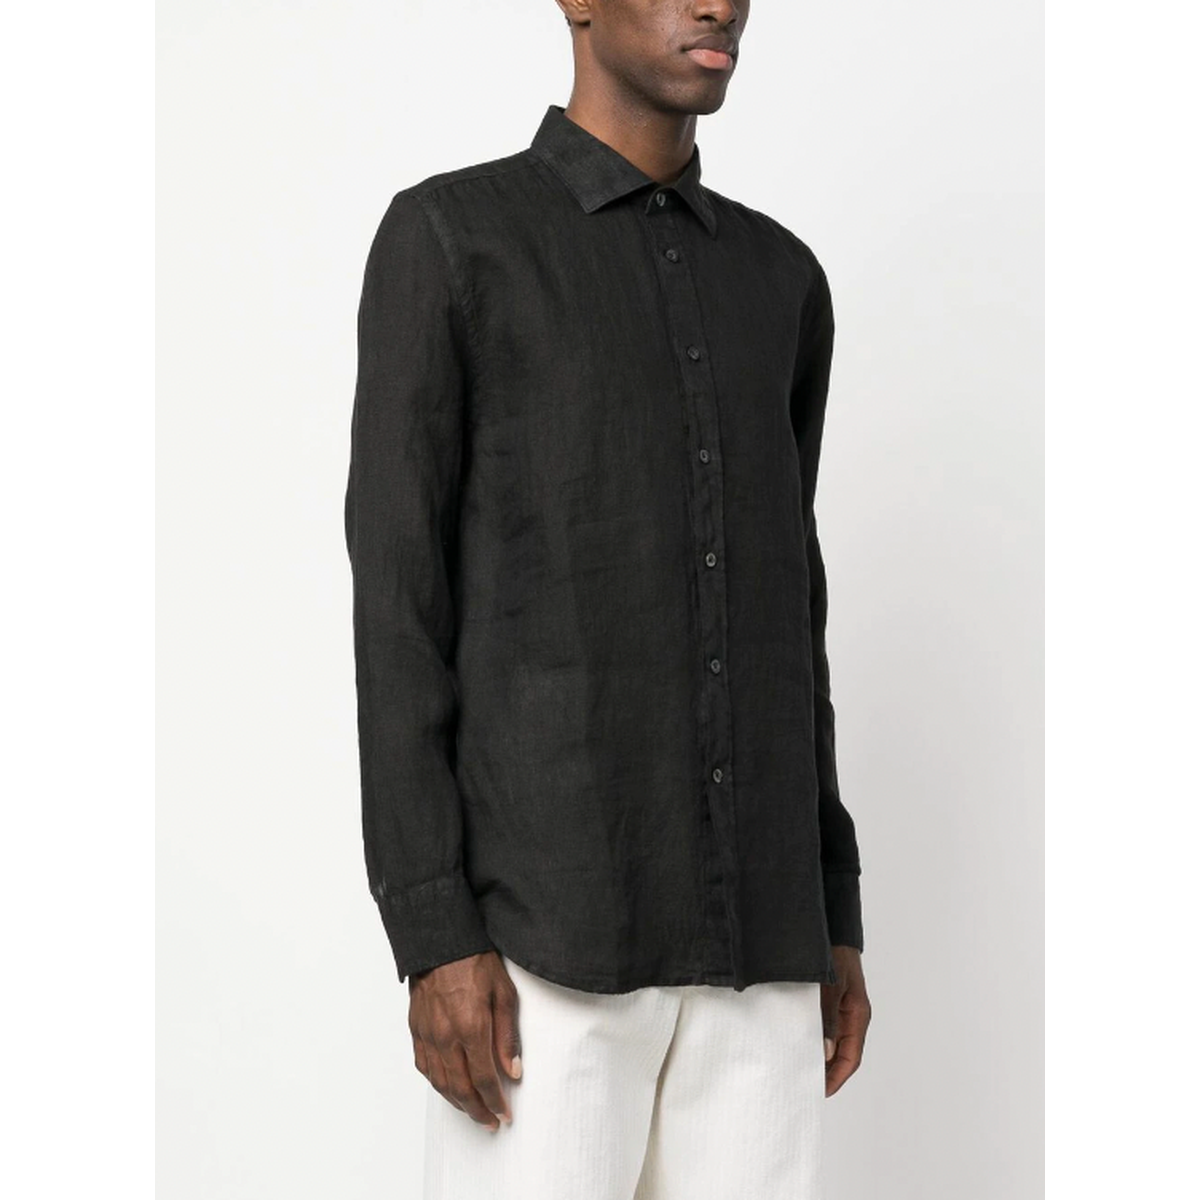 120% Lino Black Button Shirt